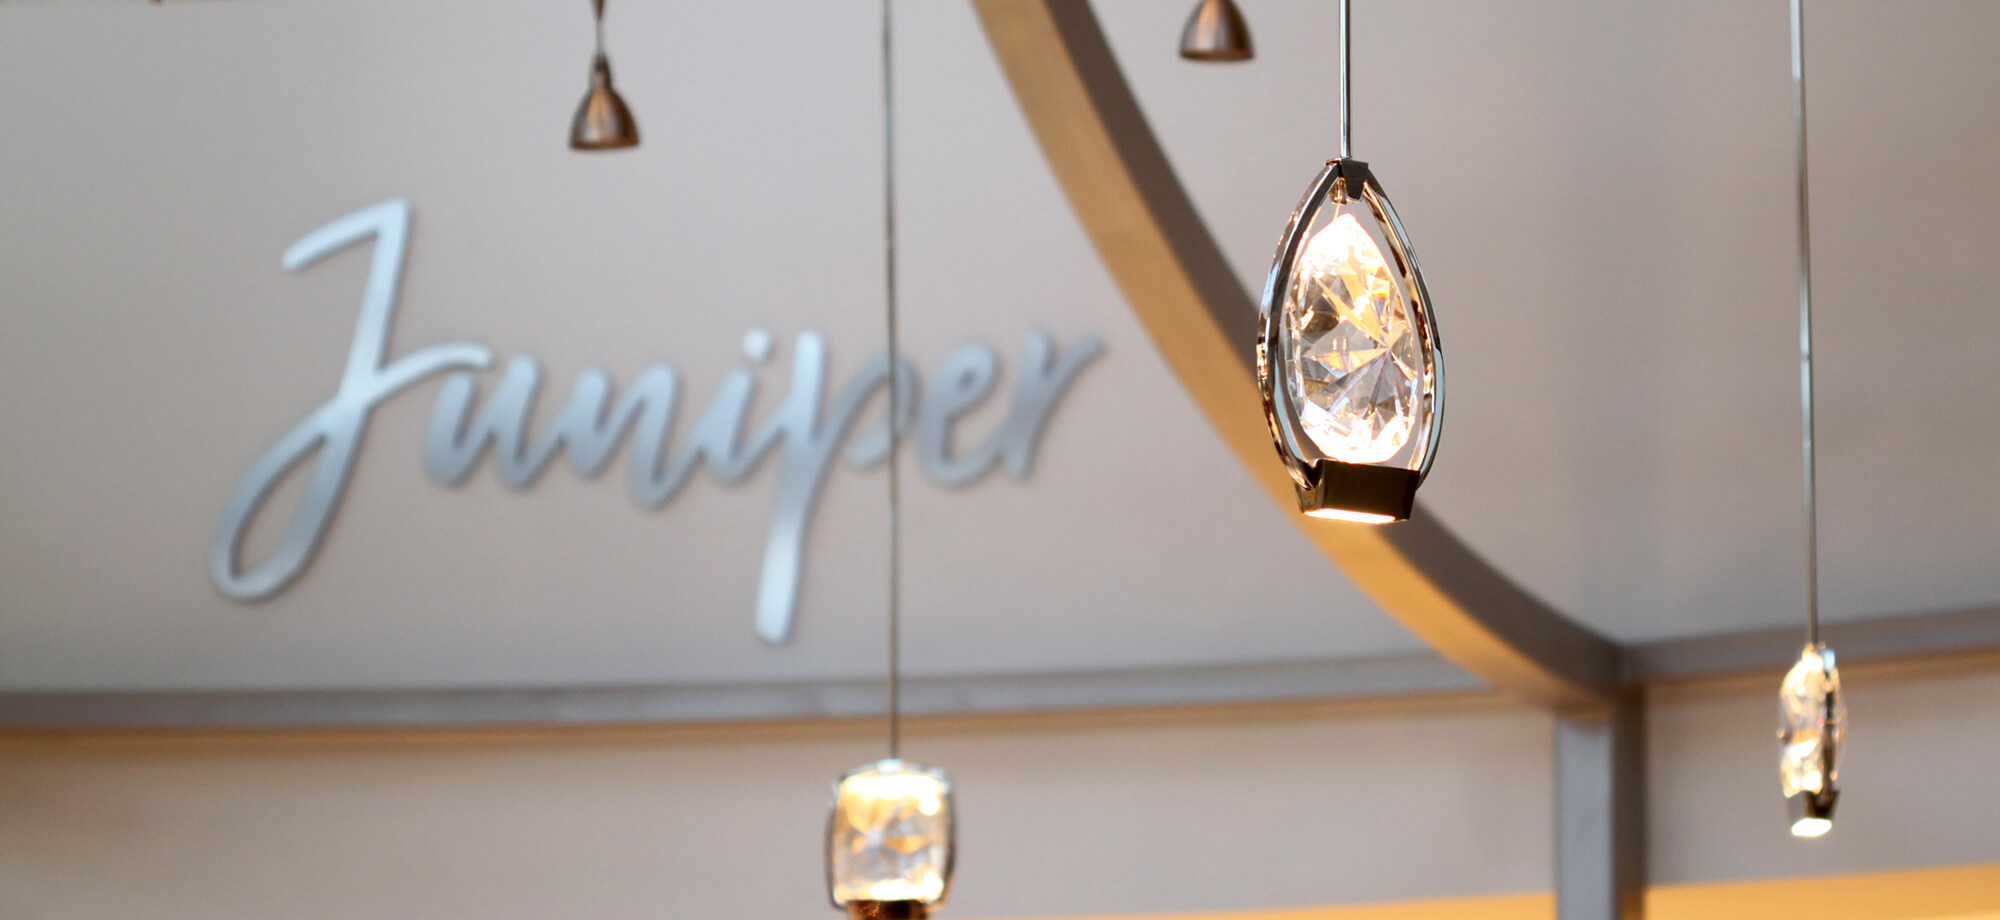 Juniper signage with lights